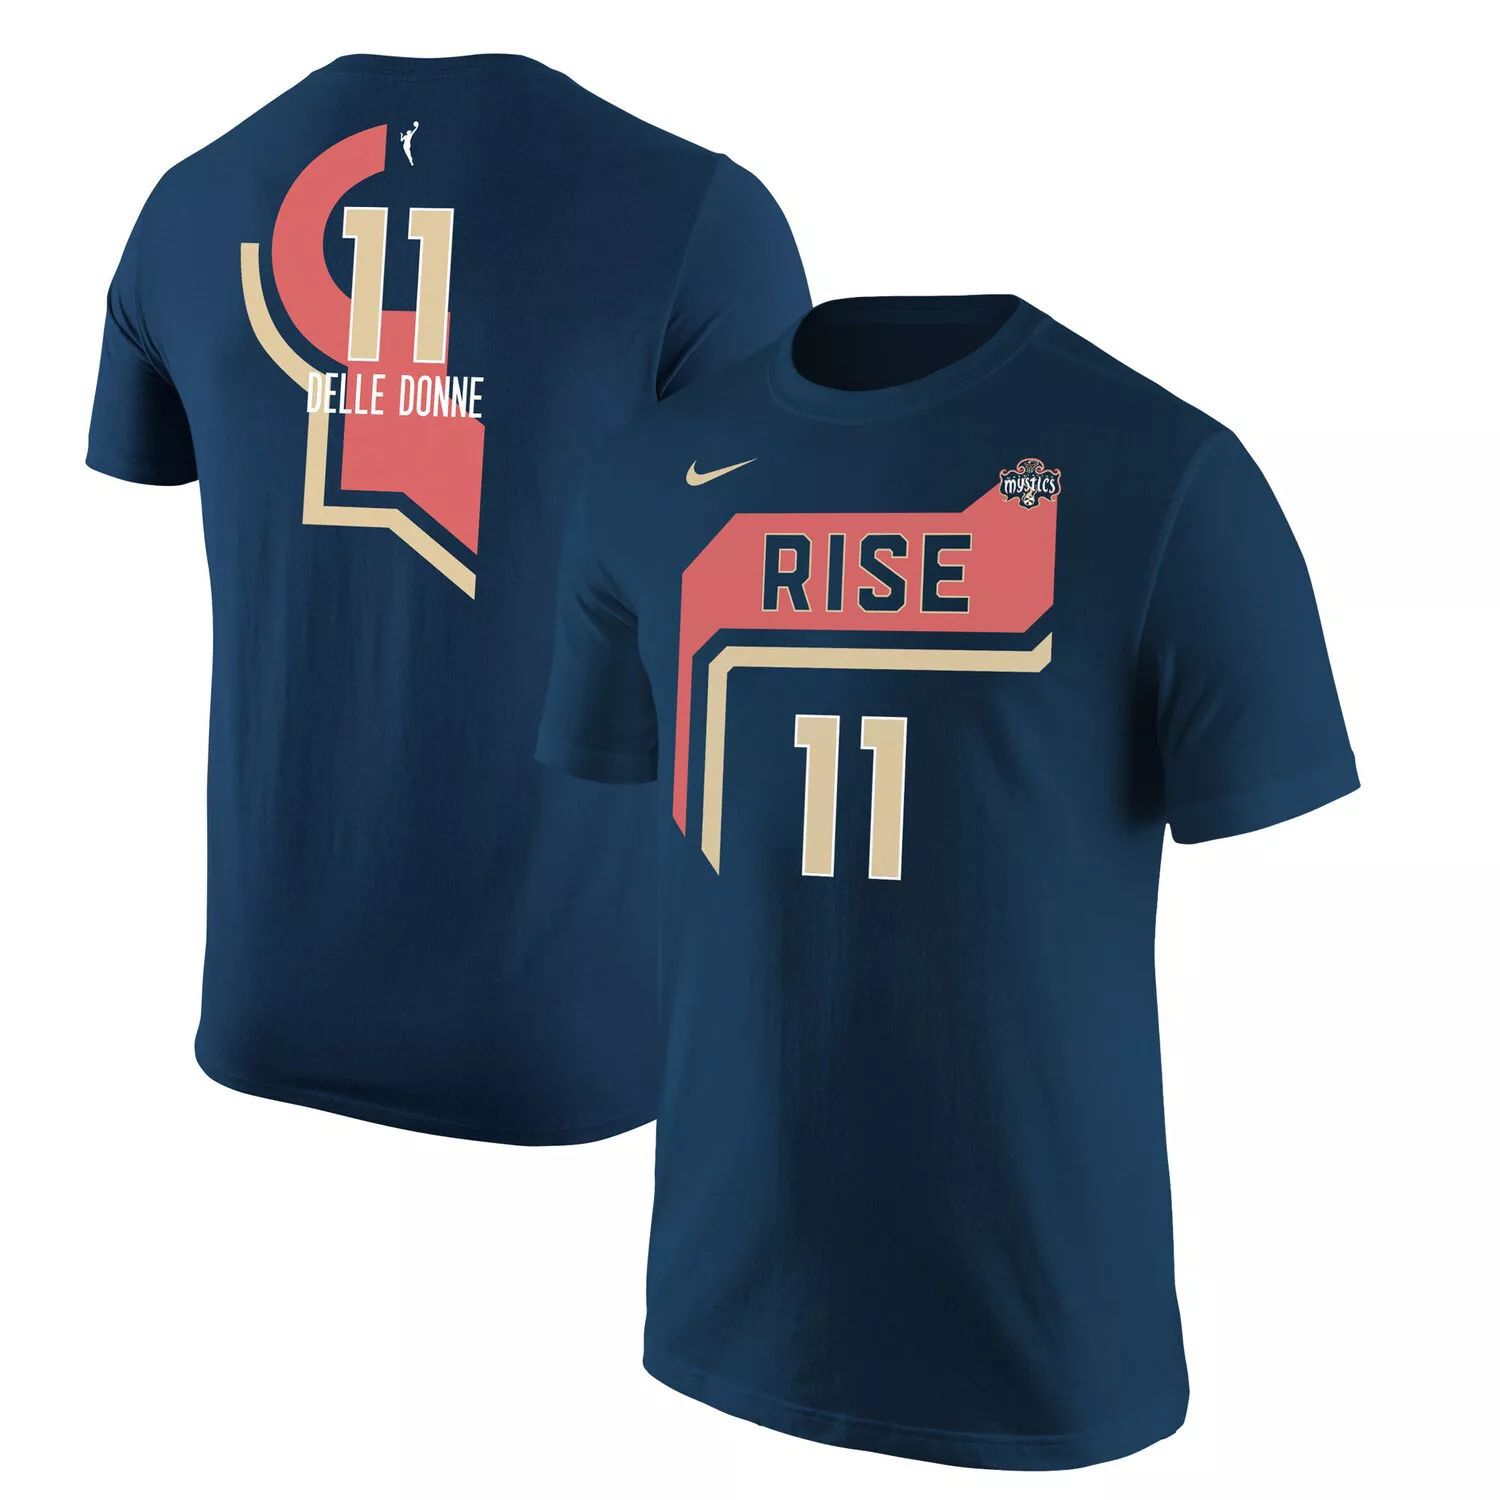 Мужская футболка Nike Елена Делле Донн темно-синяя Washington Mystics Rebel Edition с именем и номером